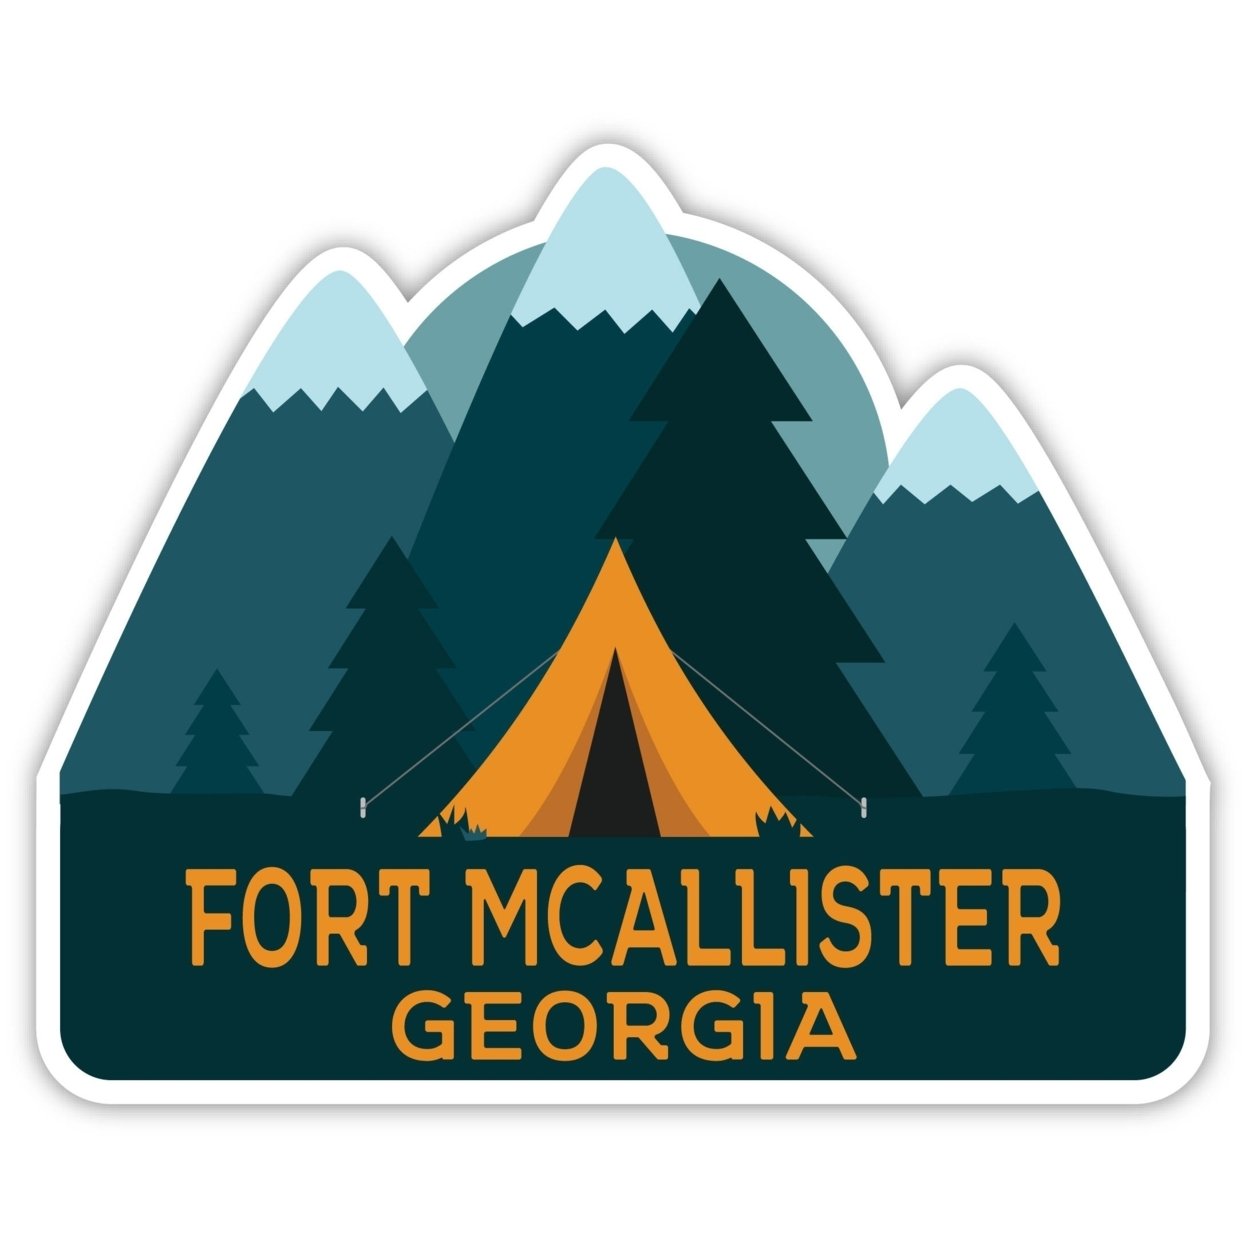 Fort McAllister Georgia Souvenir Decorative Stickers (Choose Theme And Size) - Single Unit, 6-Inch, Tent